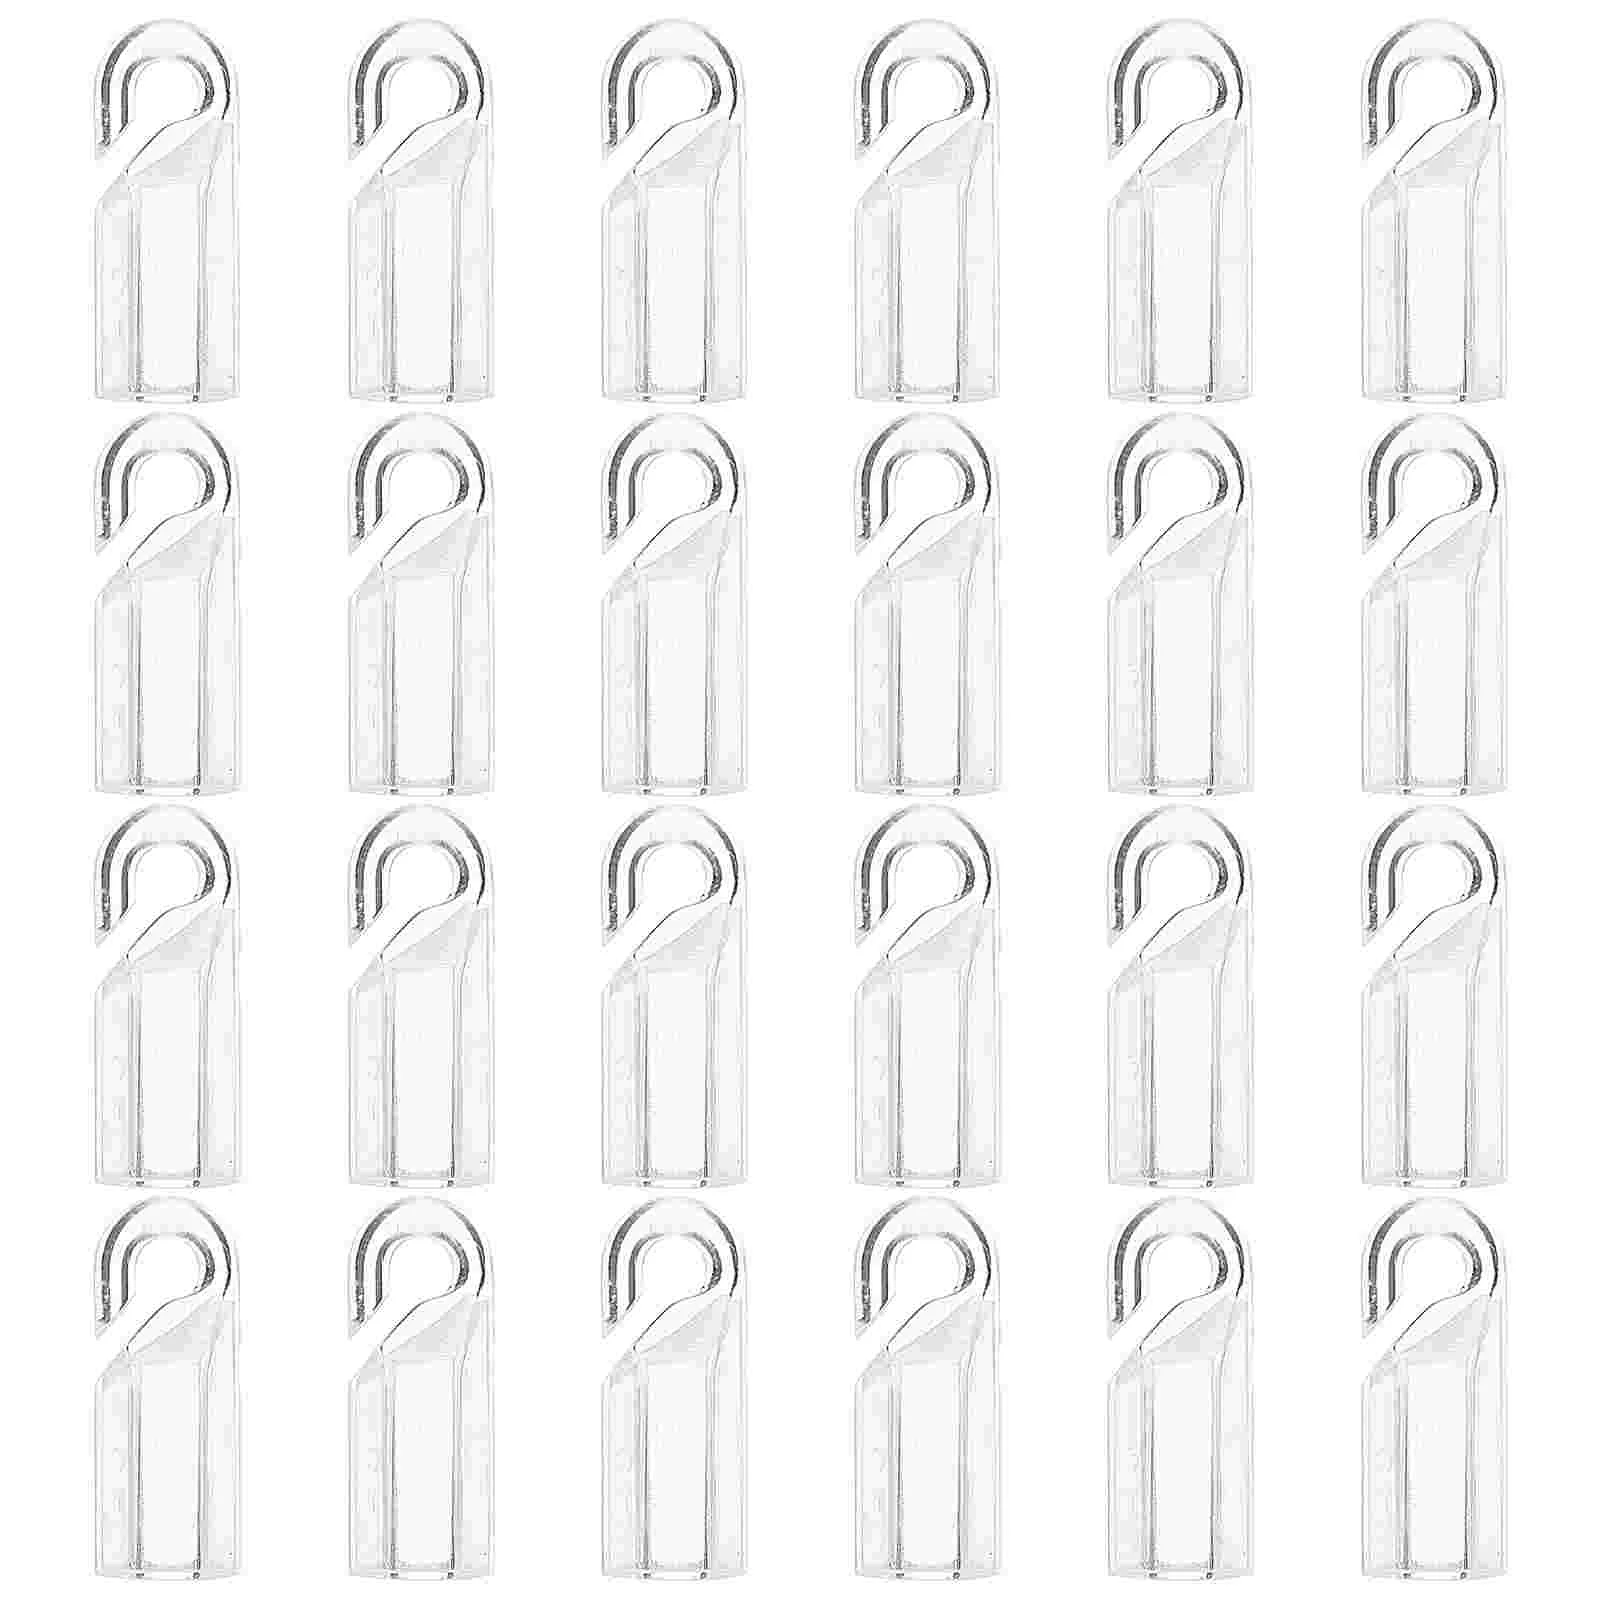 

24 Pcs Venetian Blind Handle Hook Accessory Wand Caps Plastic White Hangers Tip Replacement Hangers Parts Blinds Rod